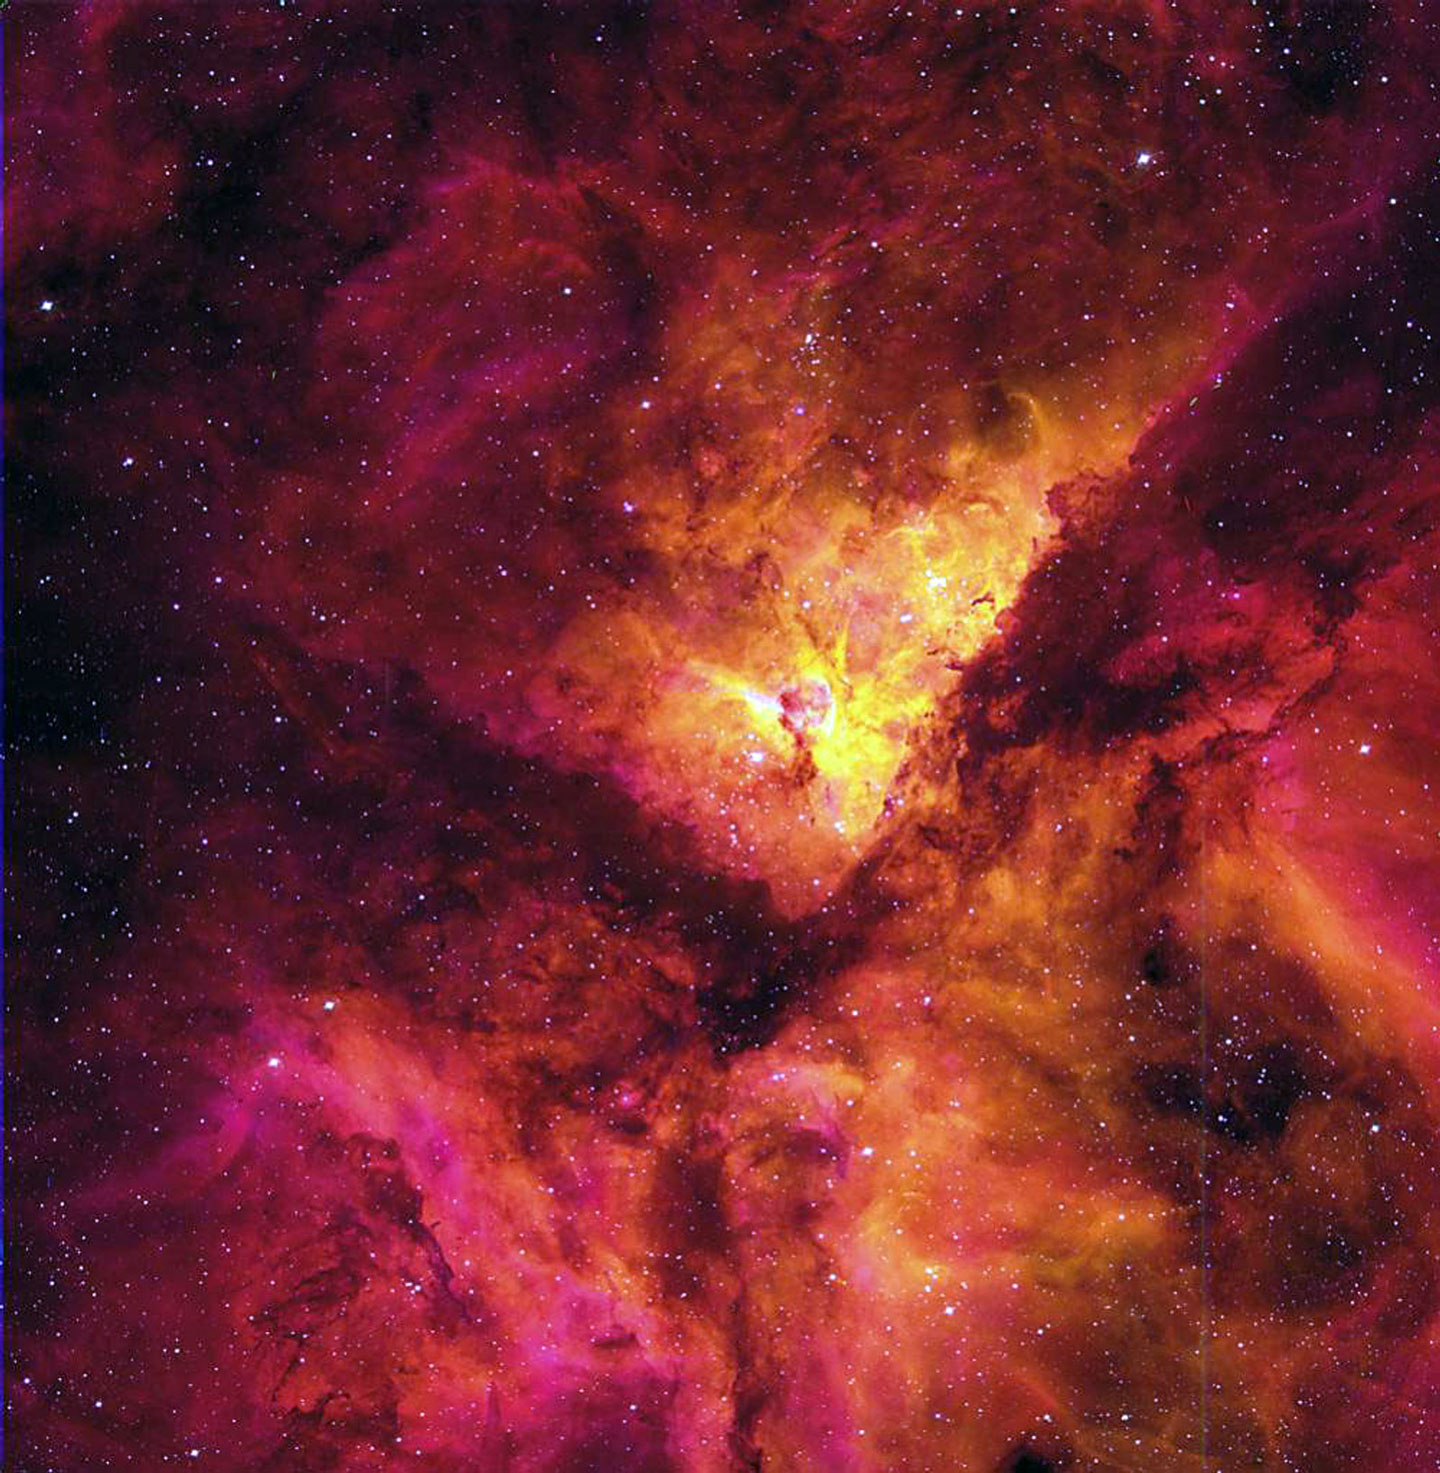 APoD image of the Carina Nebula